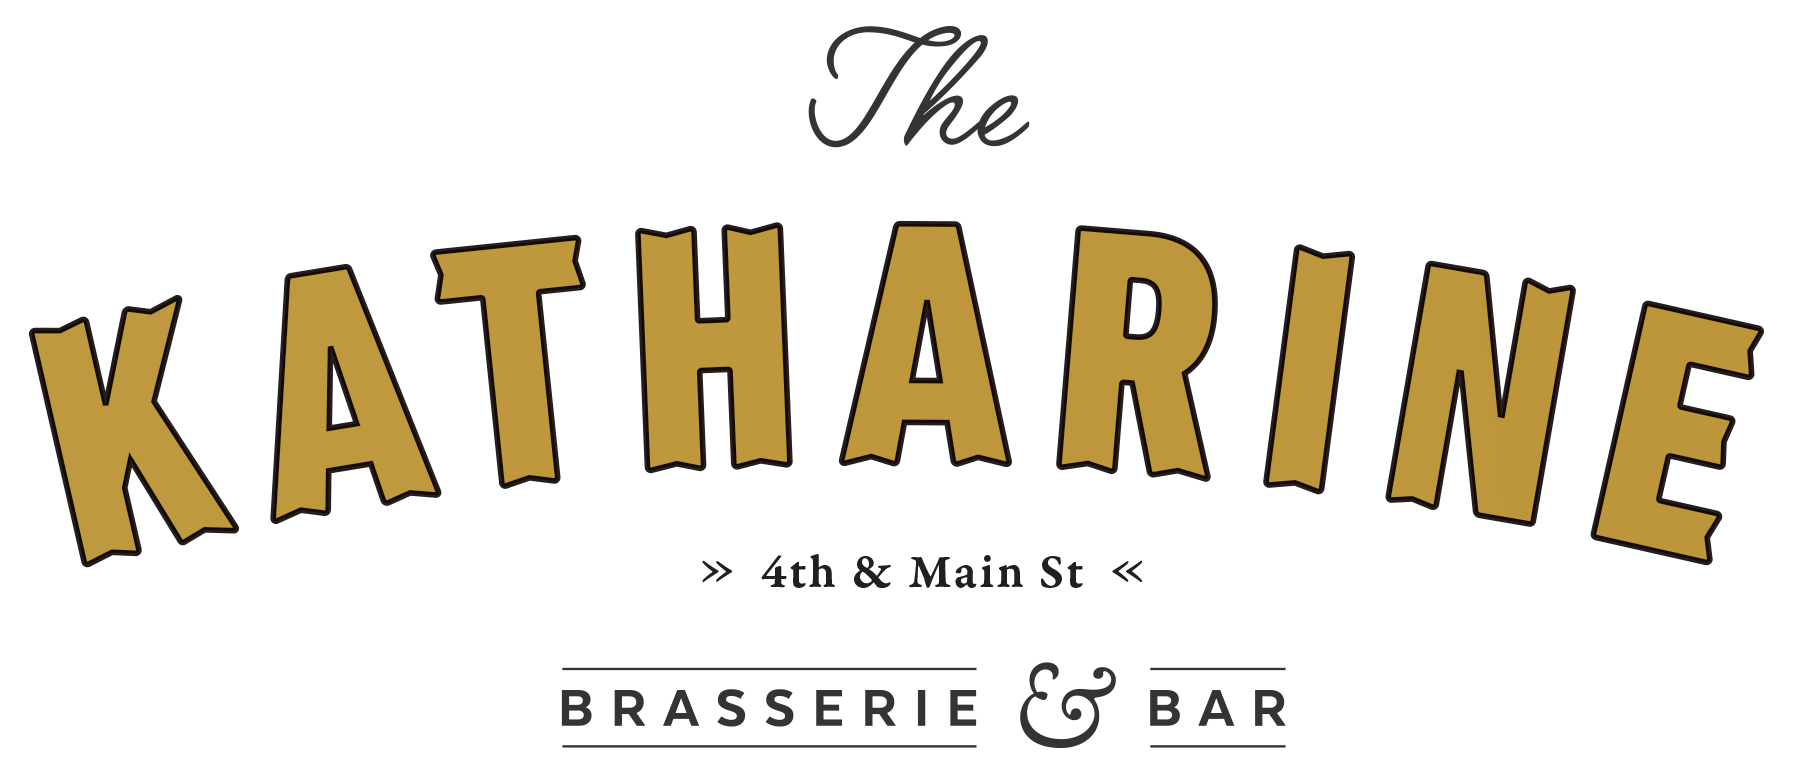 The Katharine Brasserie + Bar